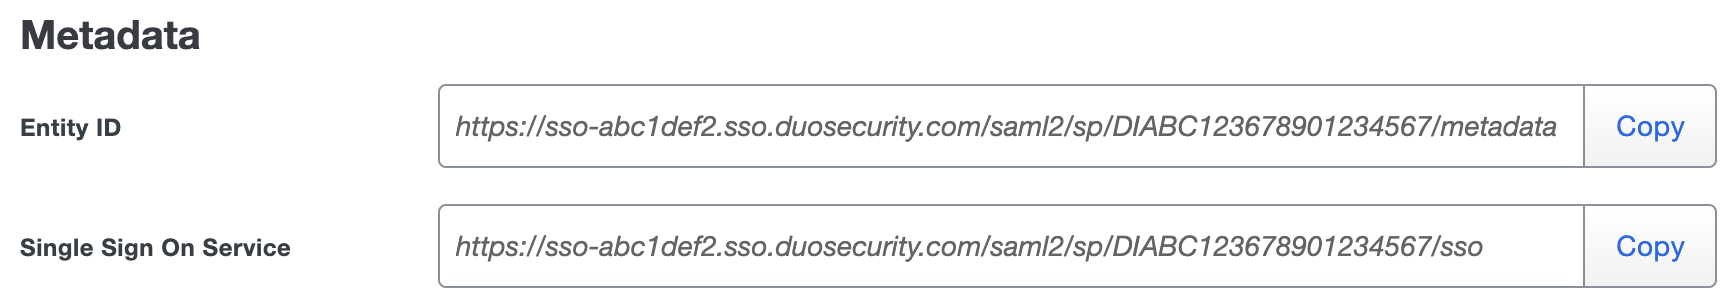 Duo Drupal Metadata URLs